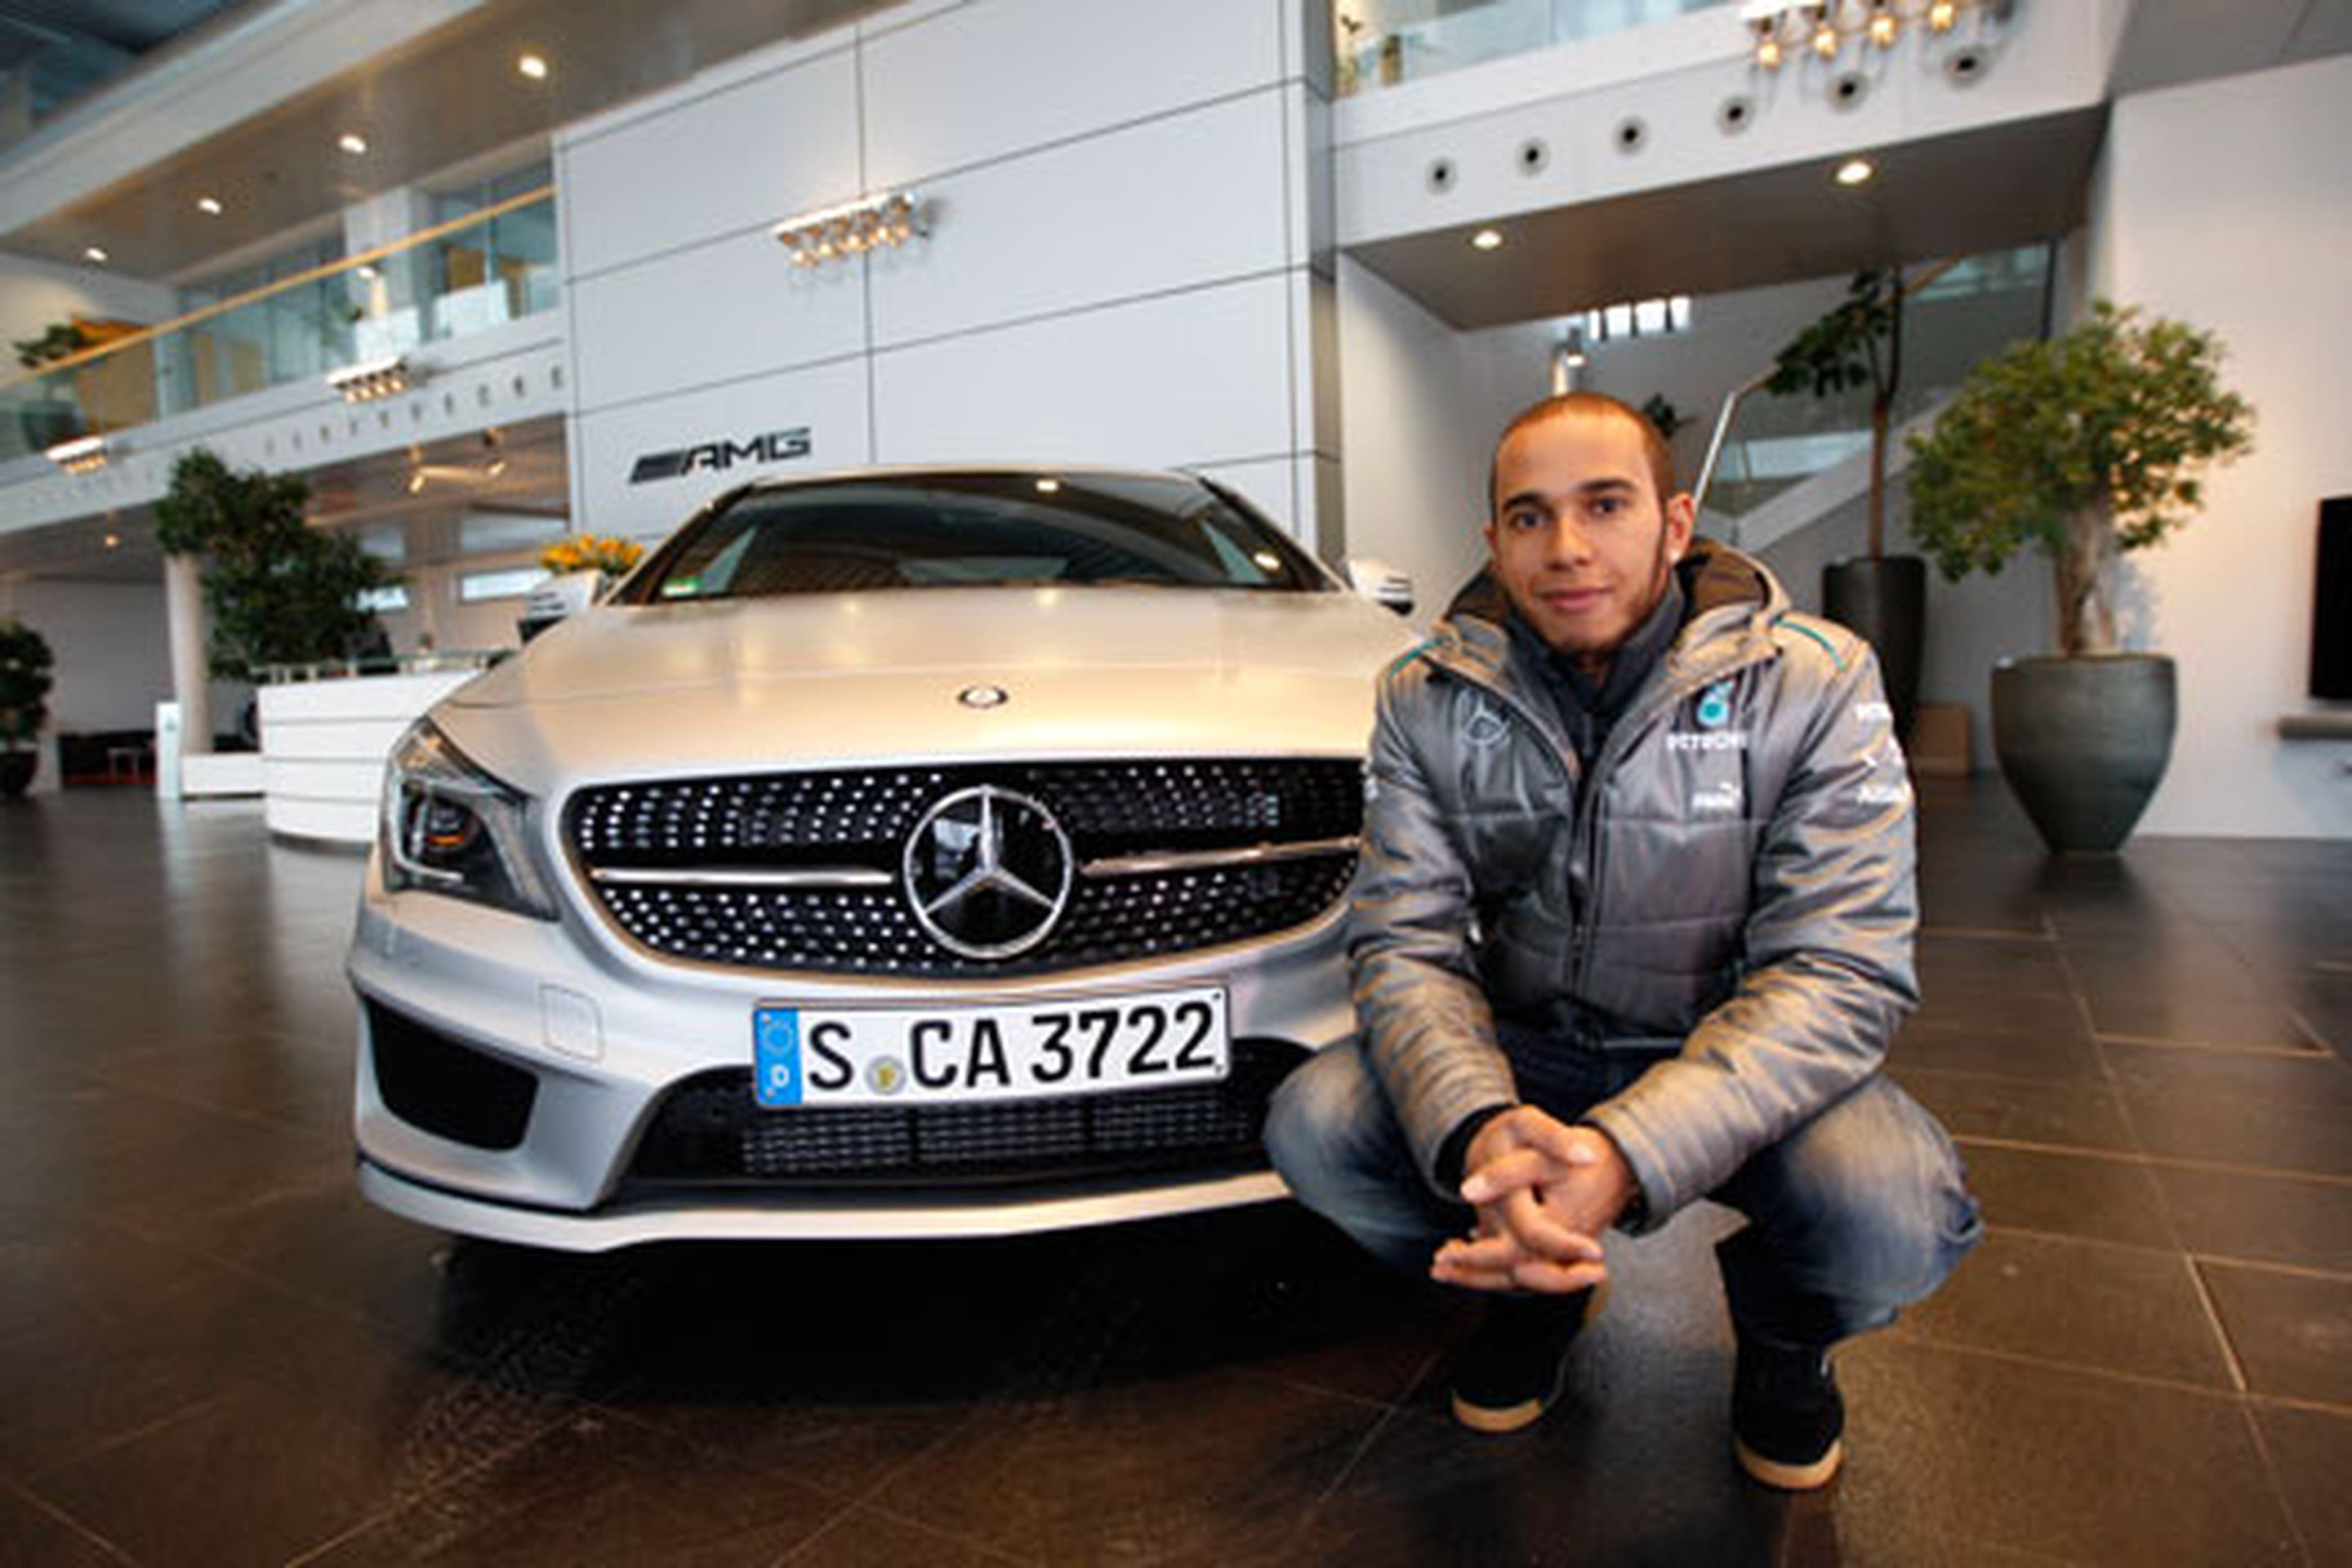 Lewis Hamilton - Mercedes - 2013